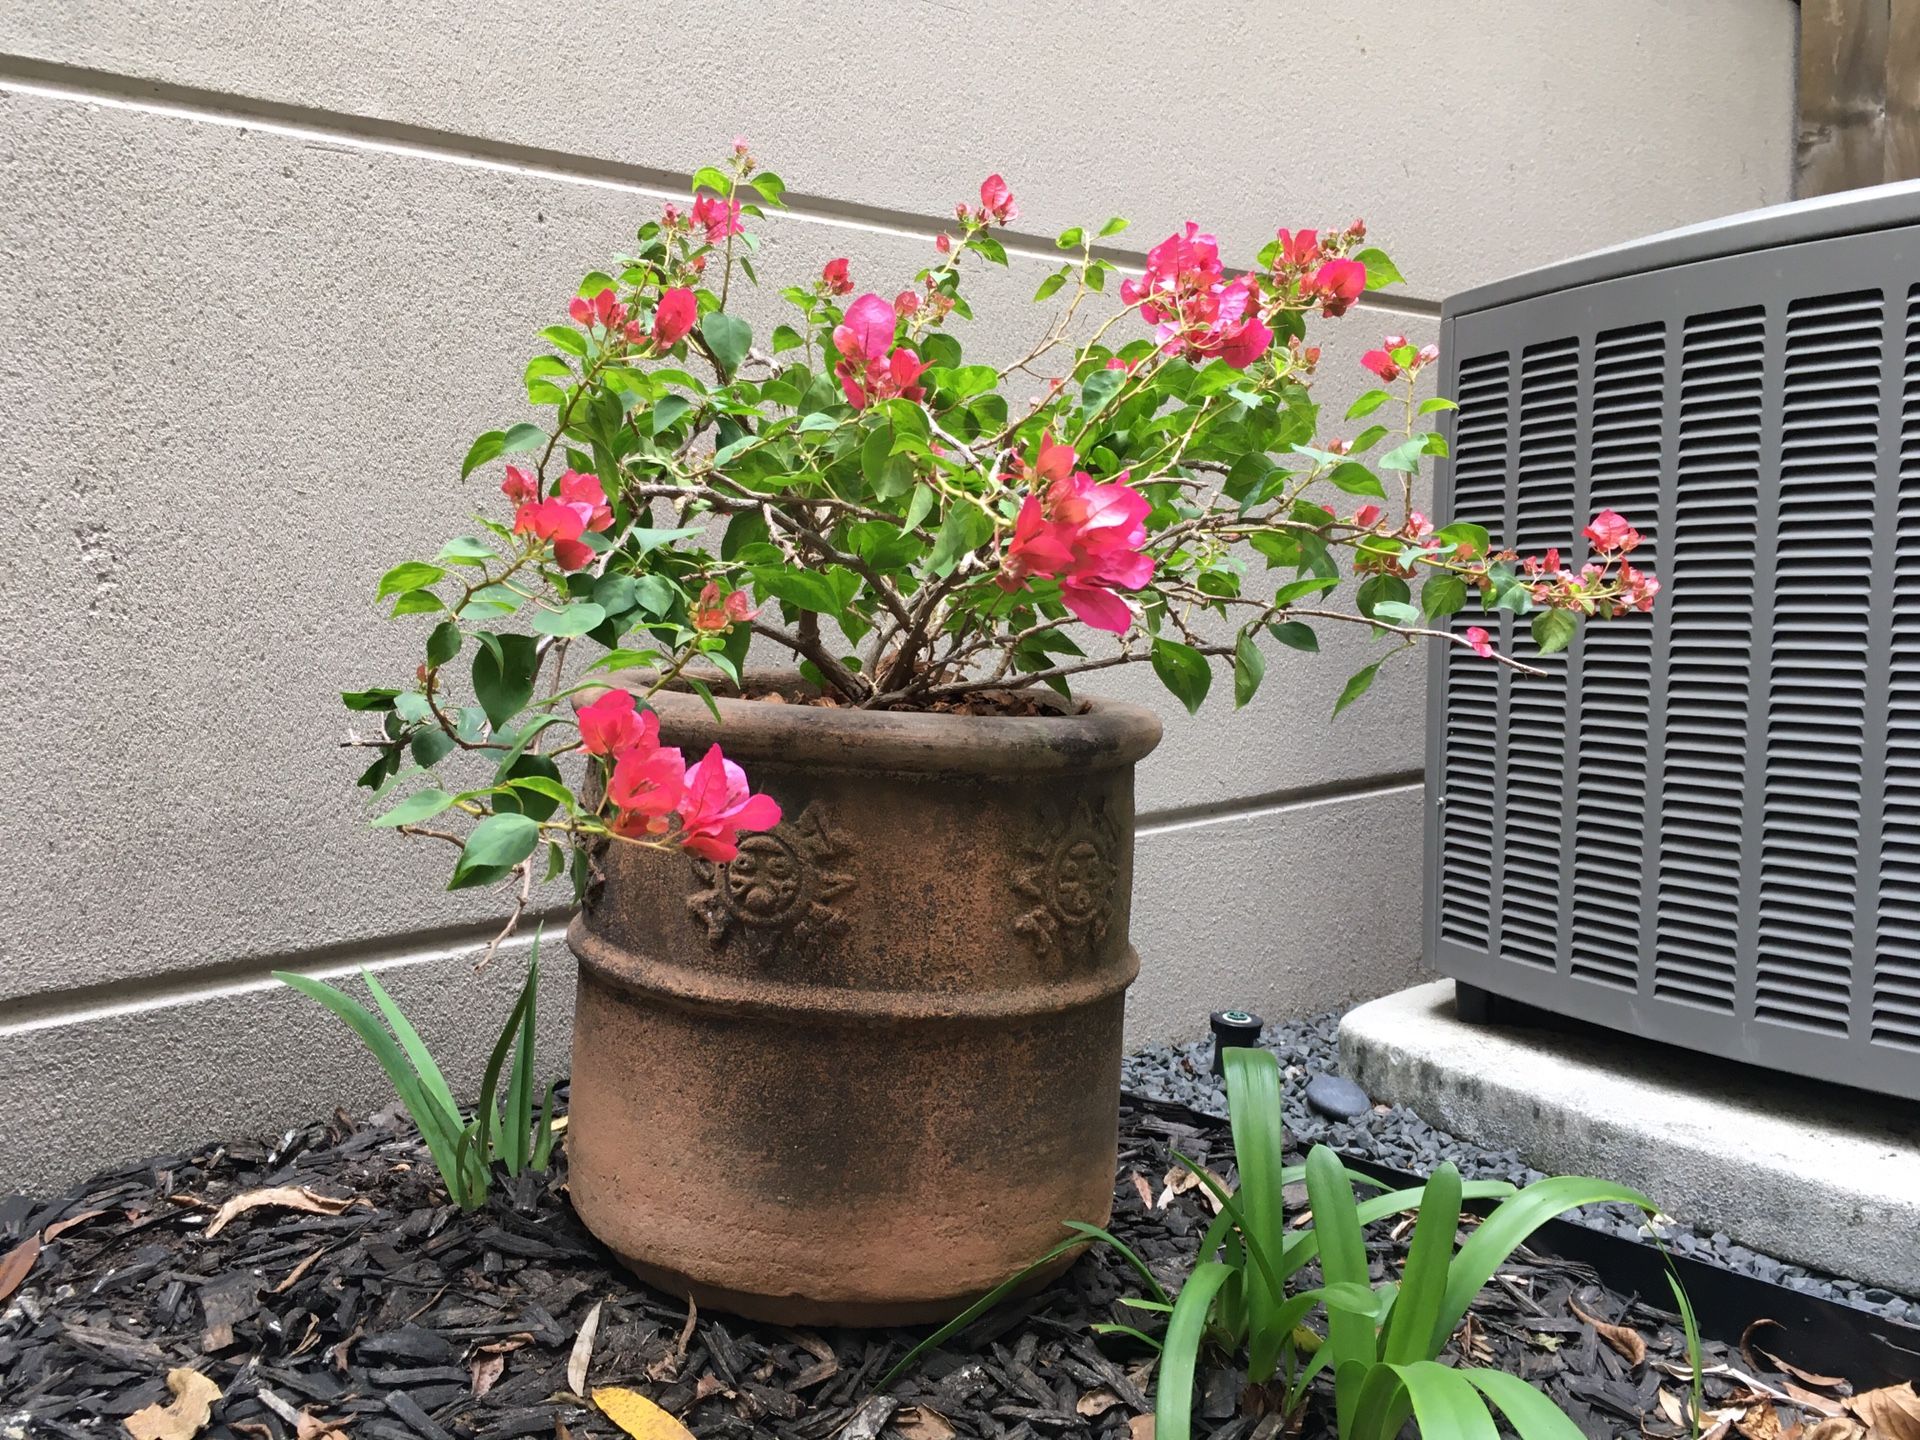 Garden bougainvillea plant terra-cotta clay planter pot with drainage 13”x13”H x35” Plant